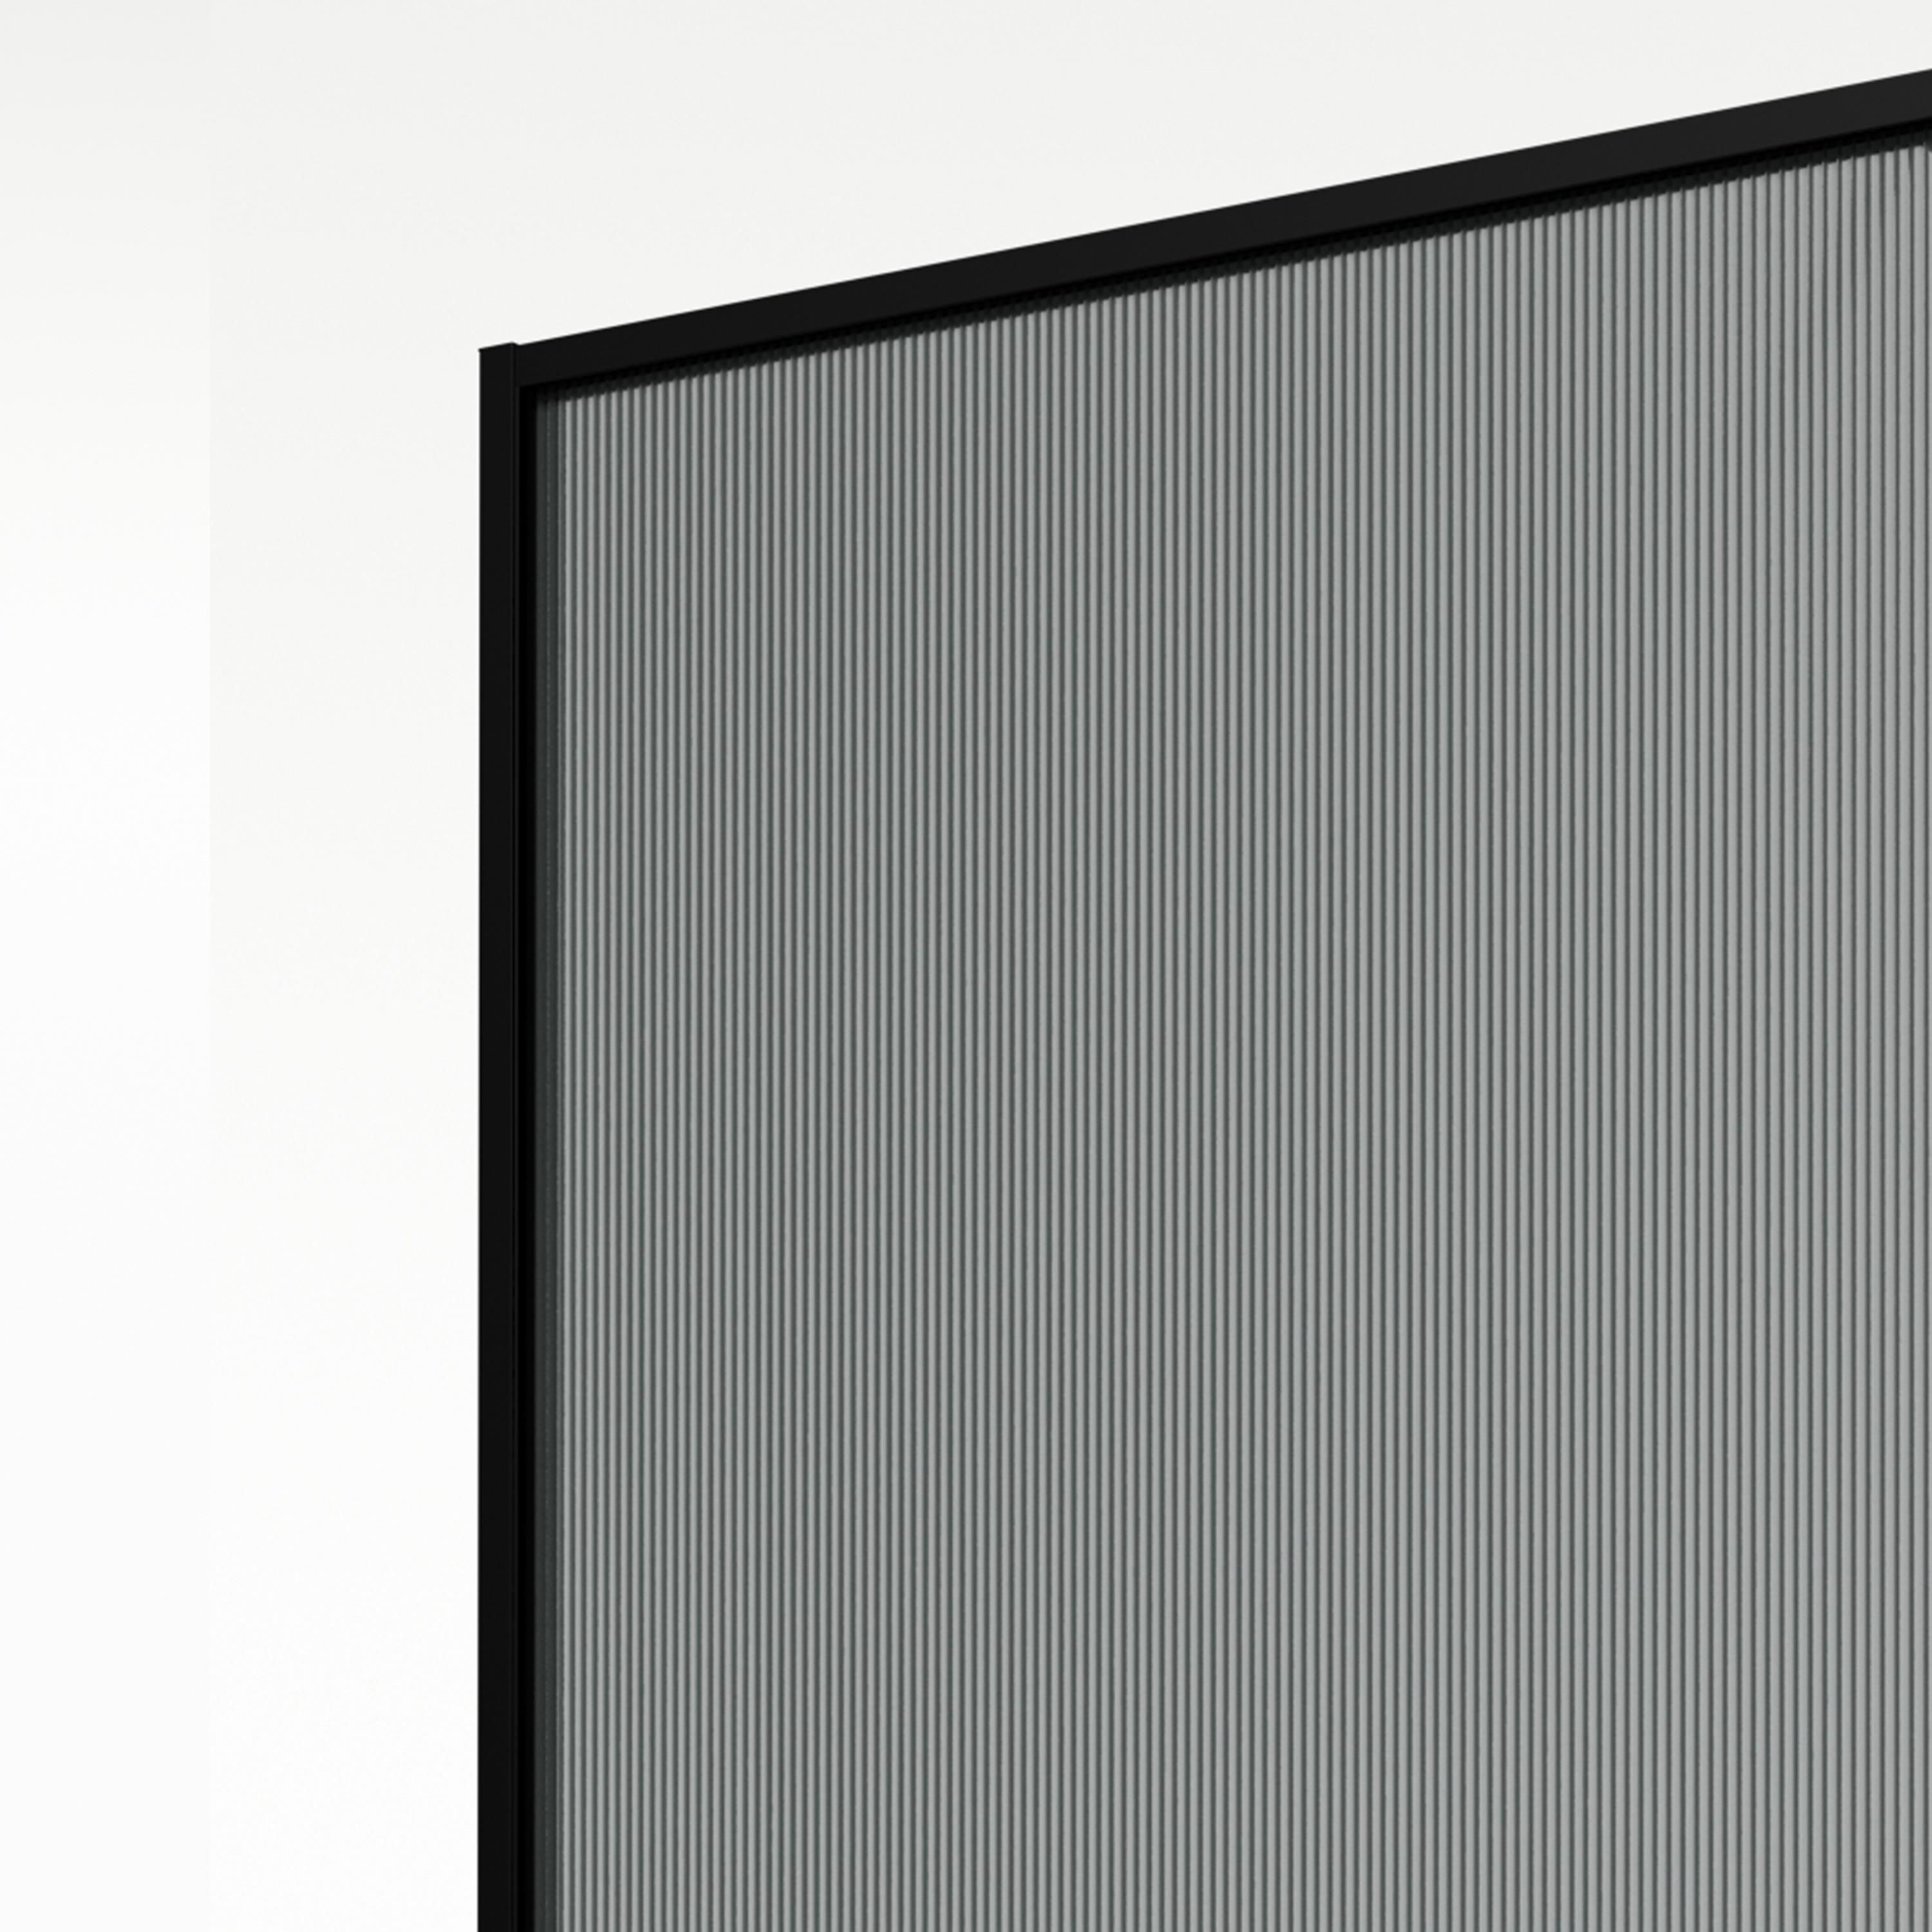 Aqualux AQ PRO Matt Black Fluted Single Wet room glass screen (H)200cm (W)100cm